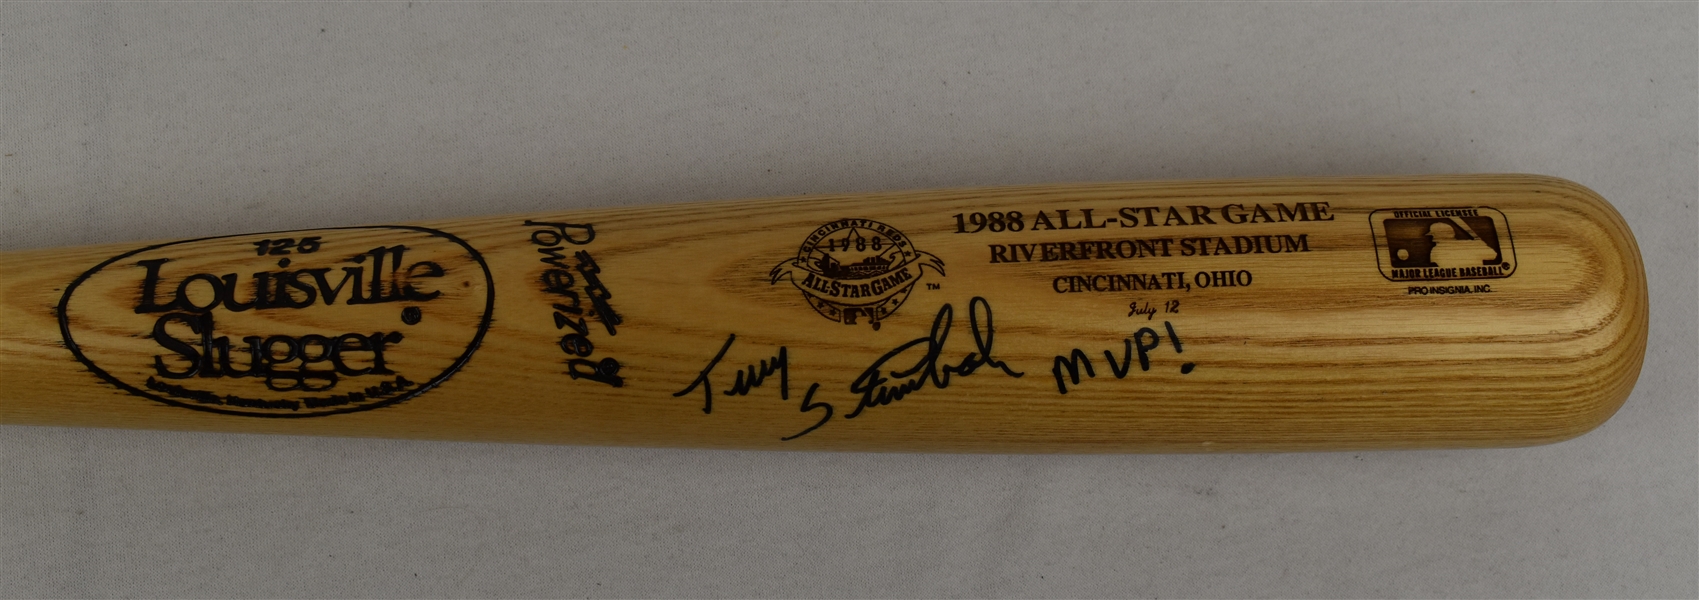 Terry Steinbach Autographed Bat